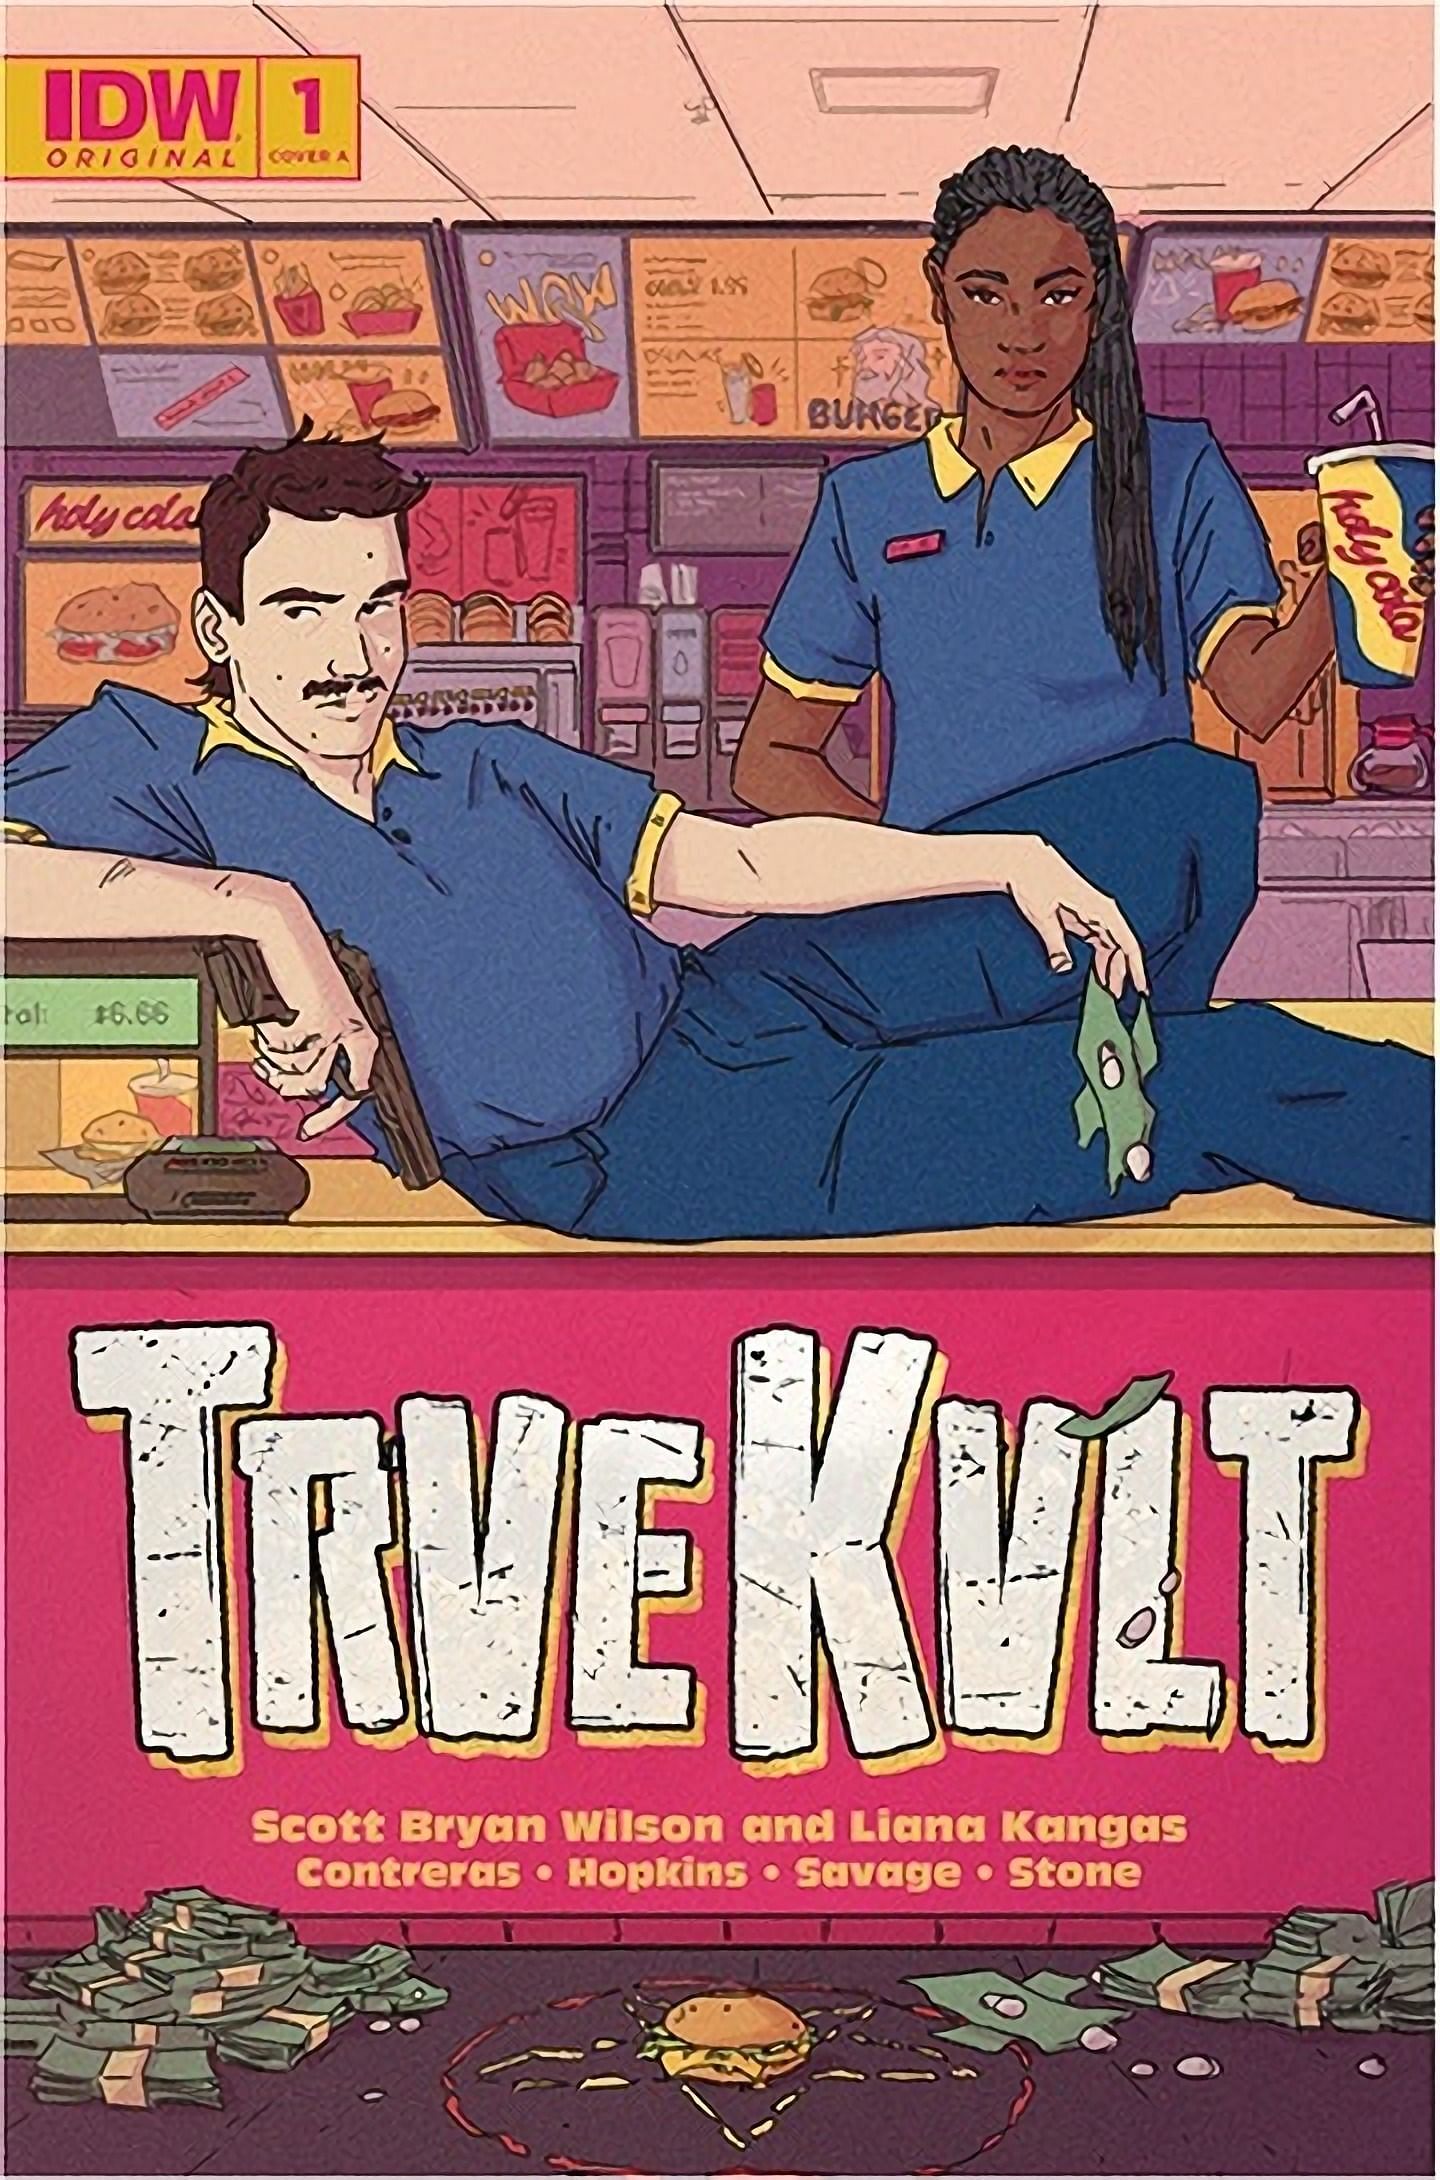 Trve Kvlt&#039;s cover (Image via IDW publishing)